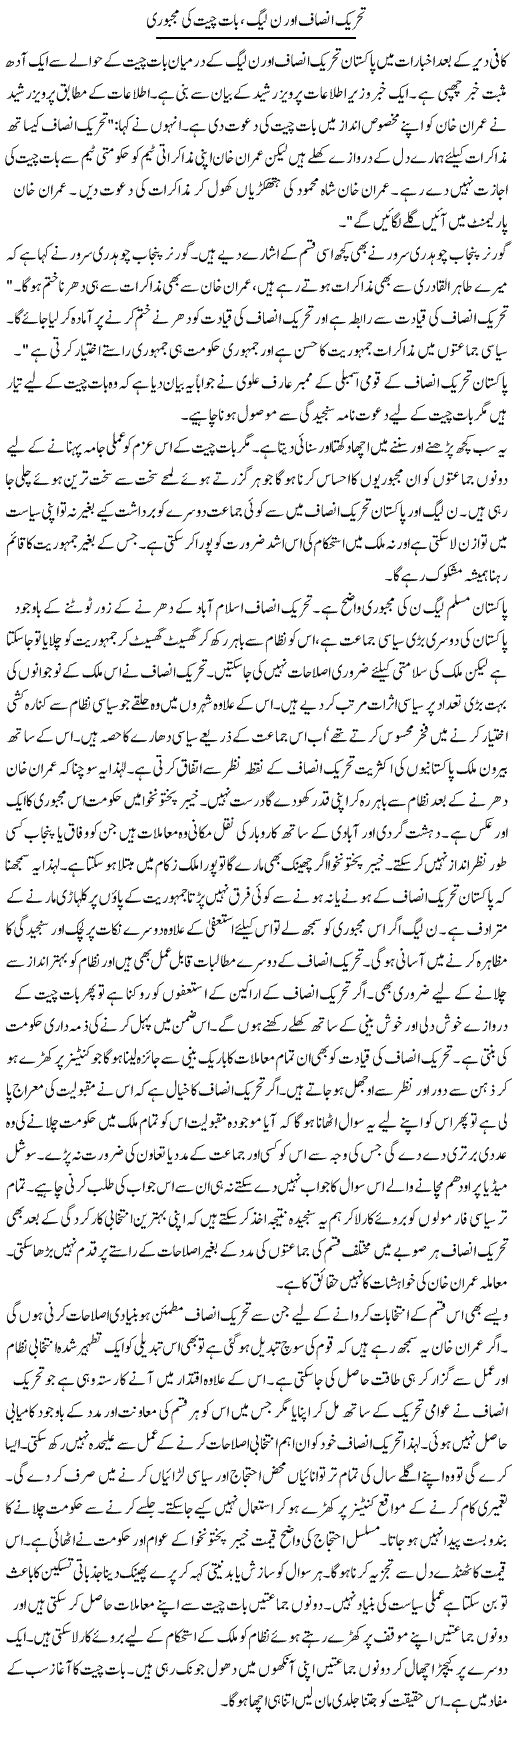 Tehreek Insaf Our N League, Baat Cheet Ki Majburi | Talat Hussain | Daily Urdu Columns